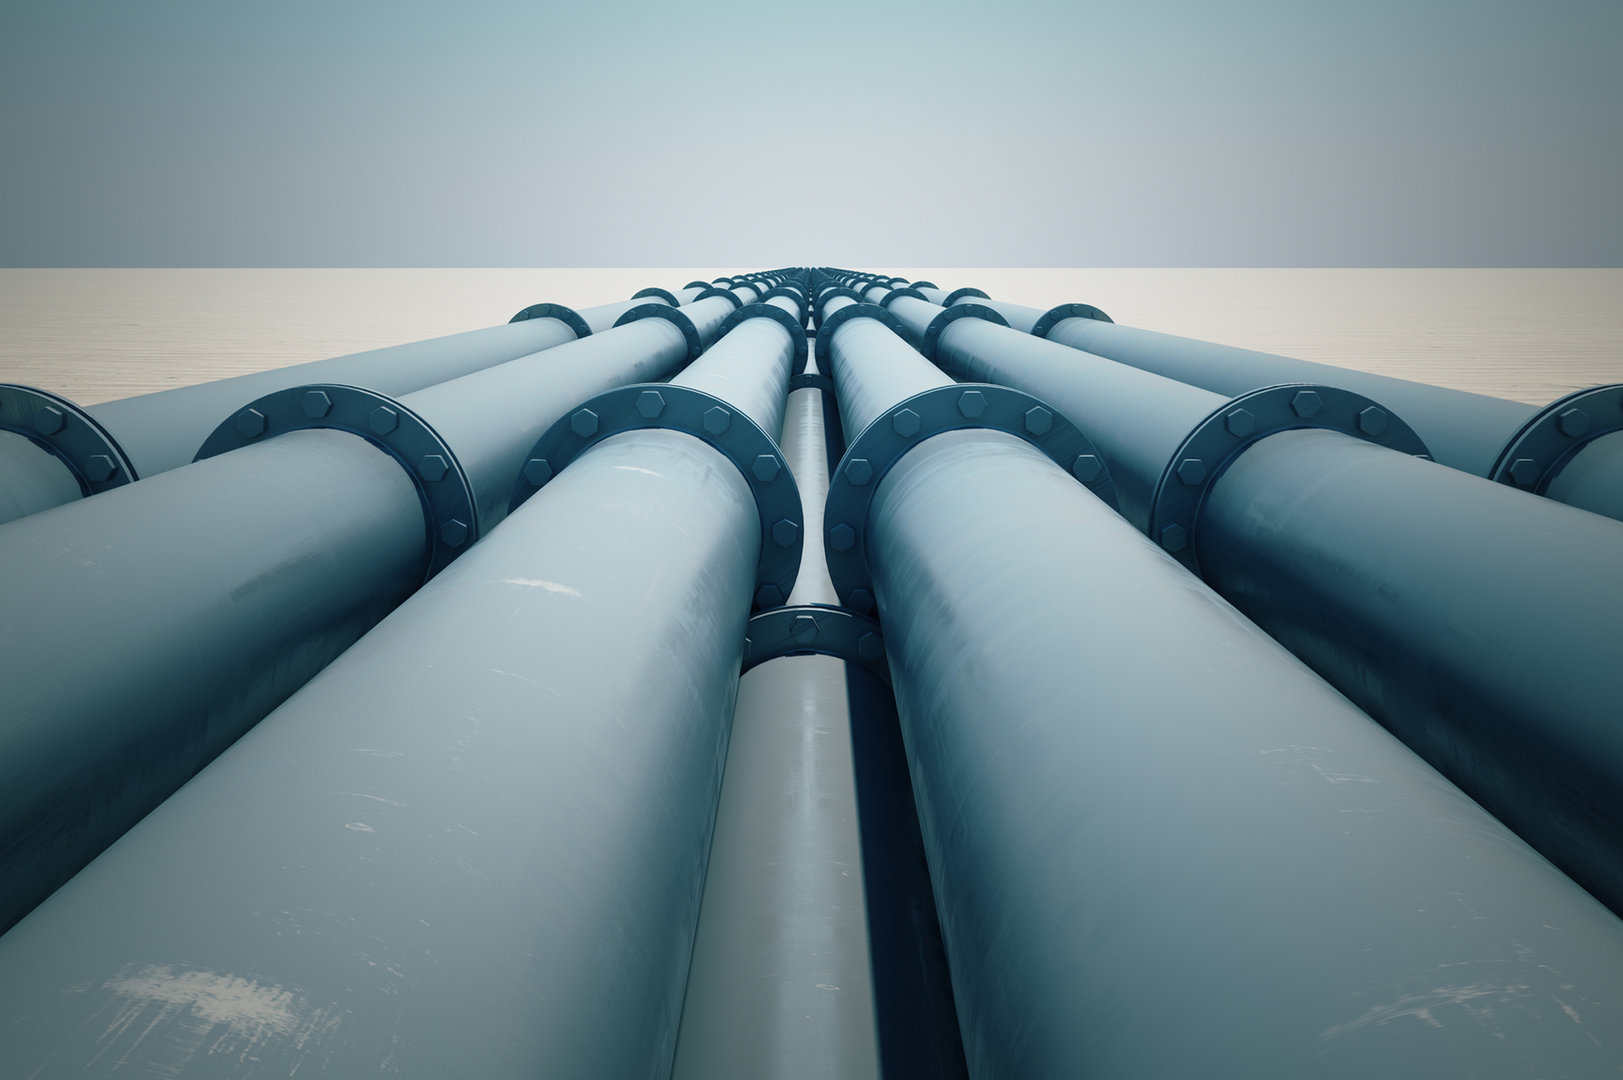 Natural Rubber Order for Pipeline Secured